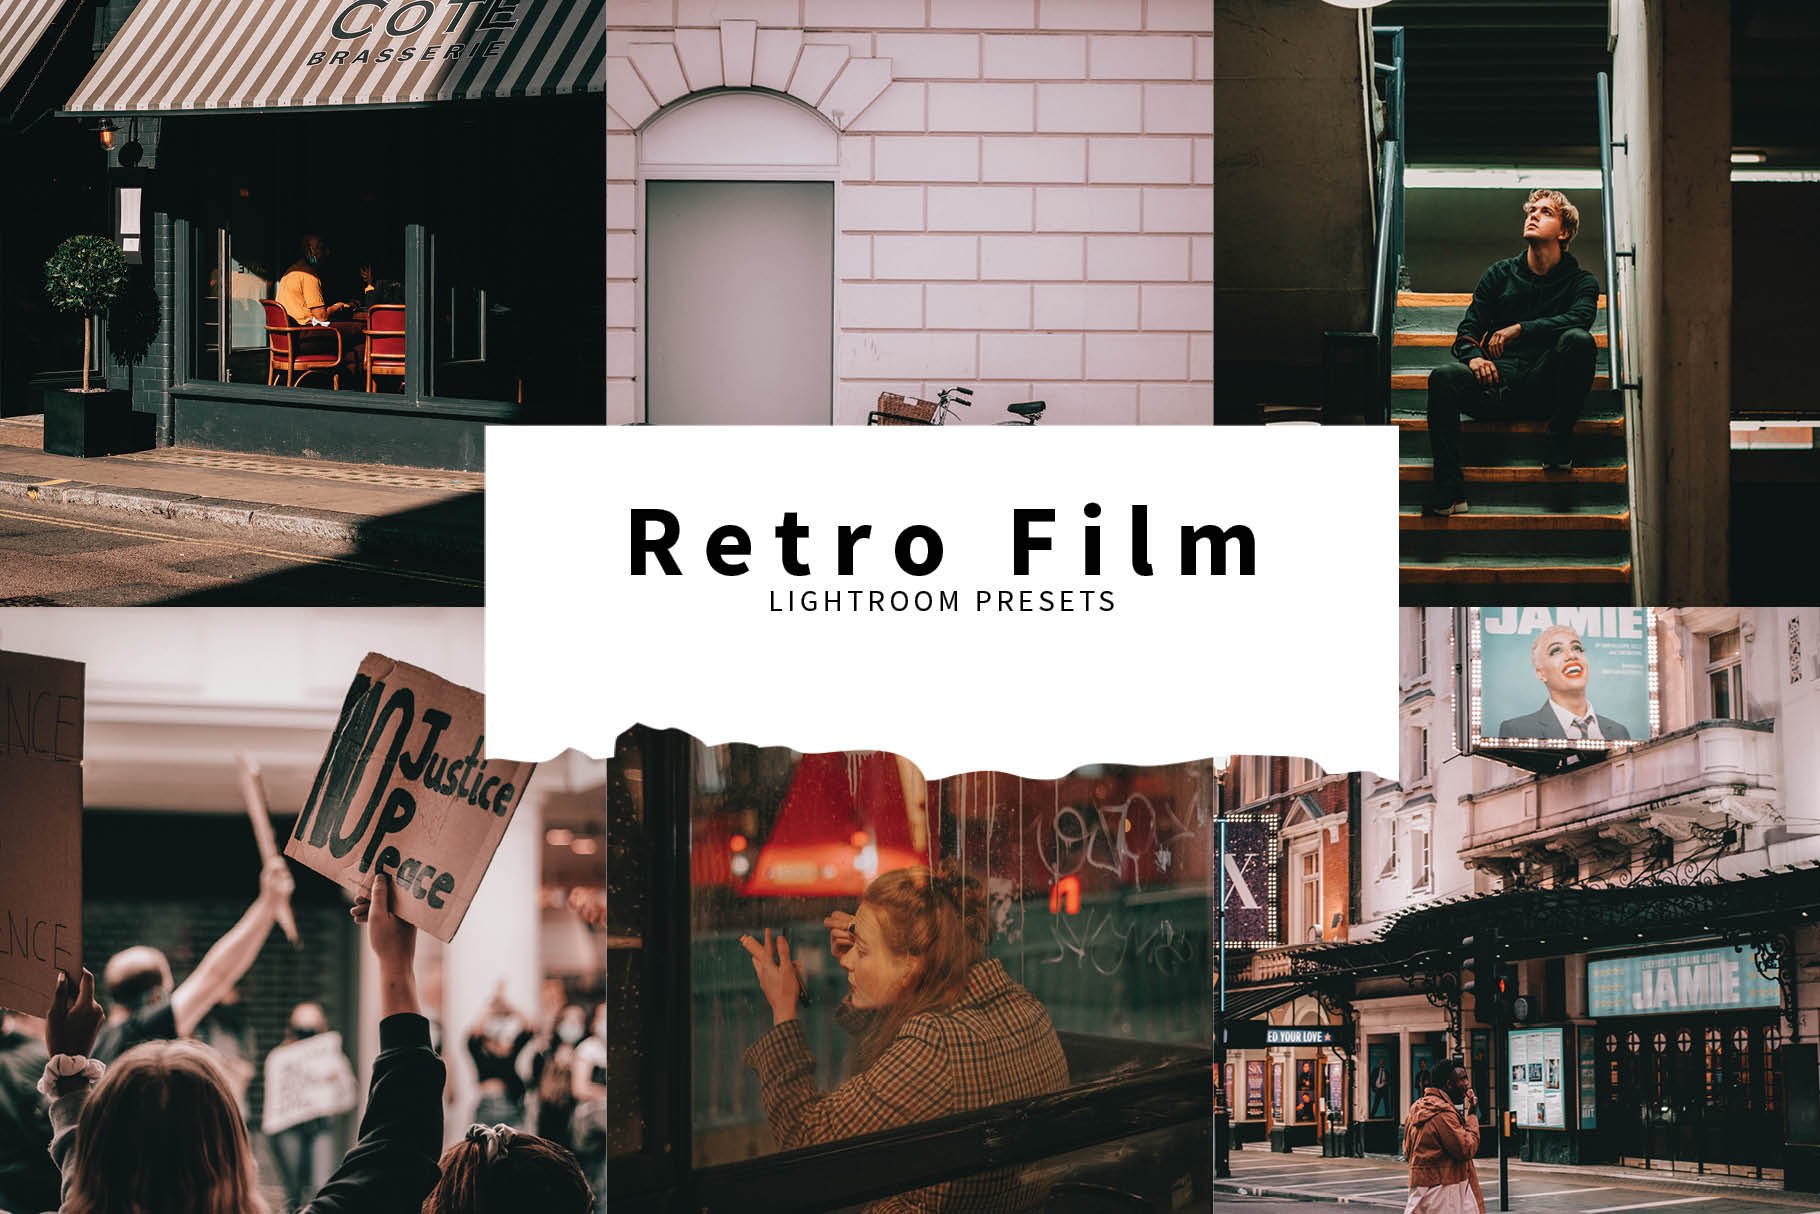 10 Retro Film Lightroom Presetscover image.